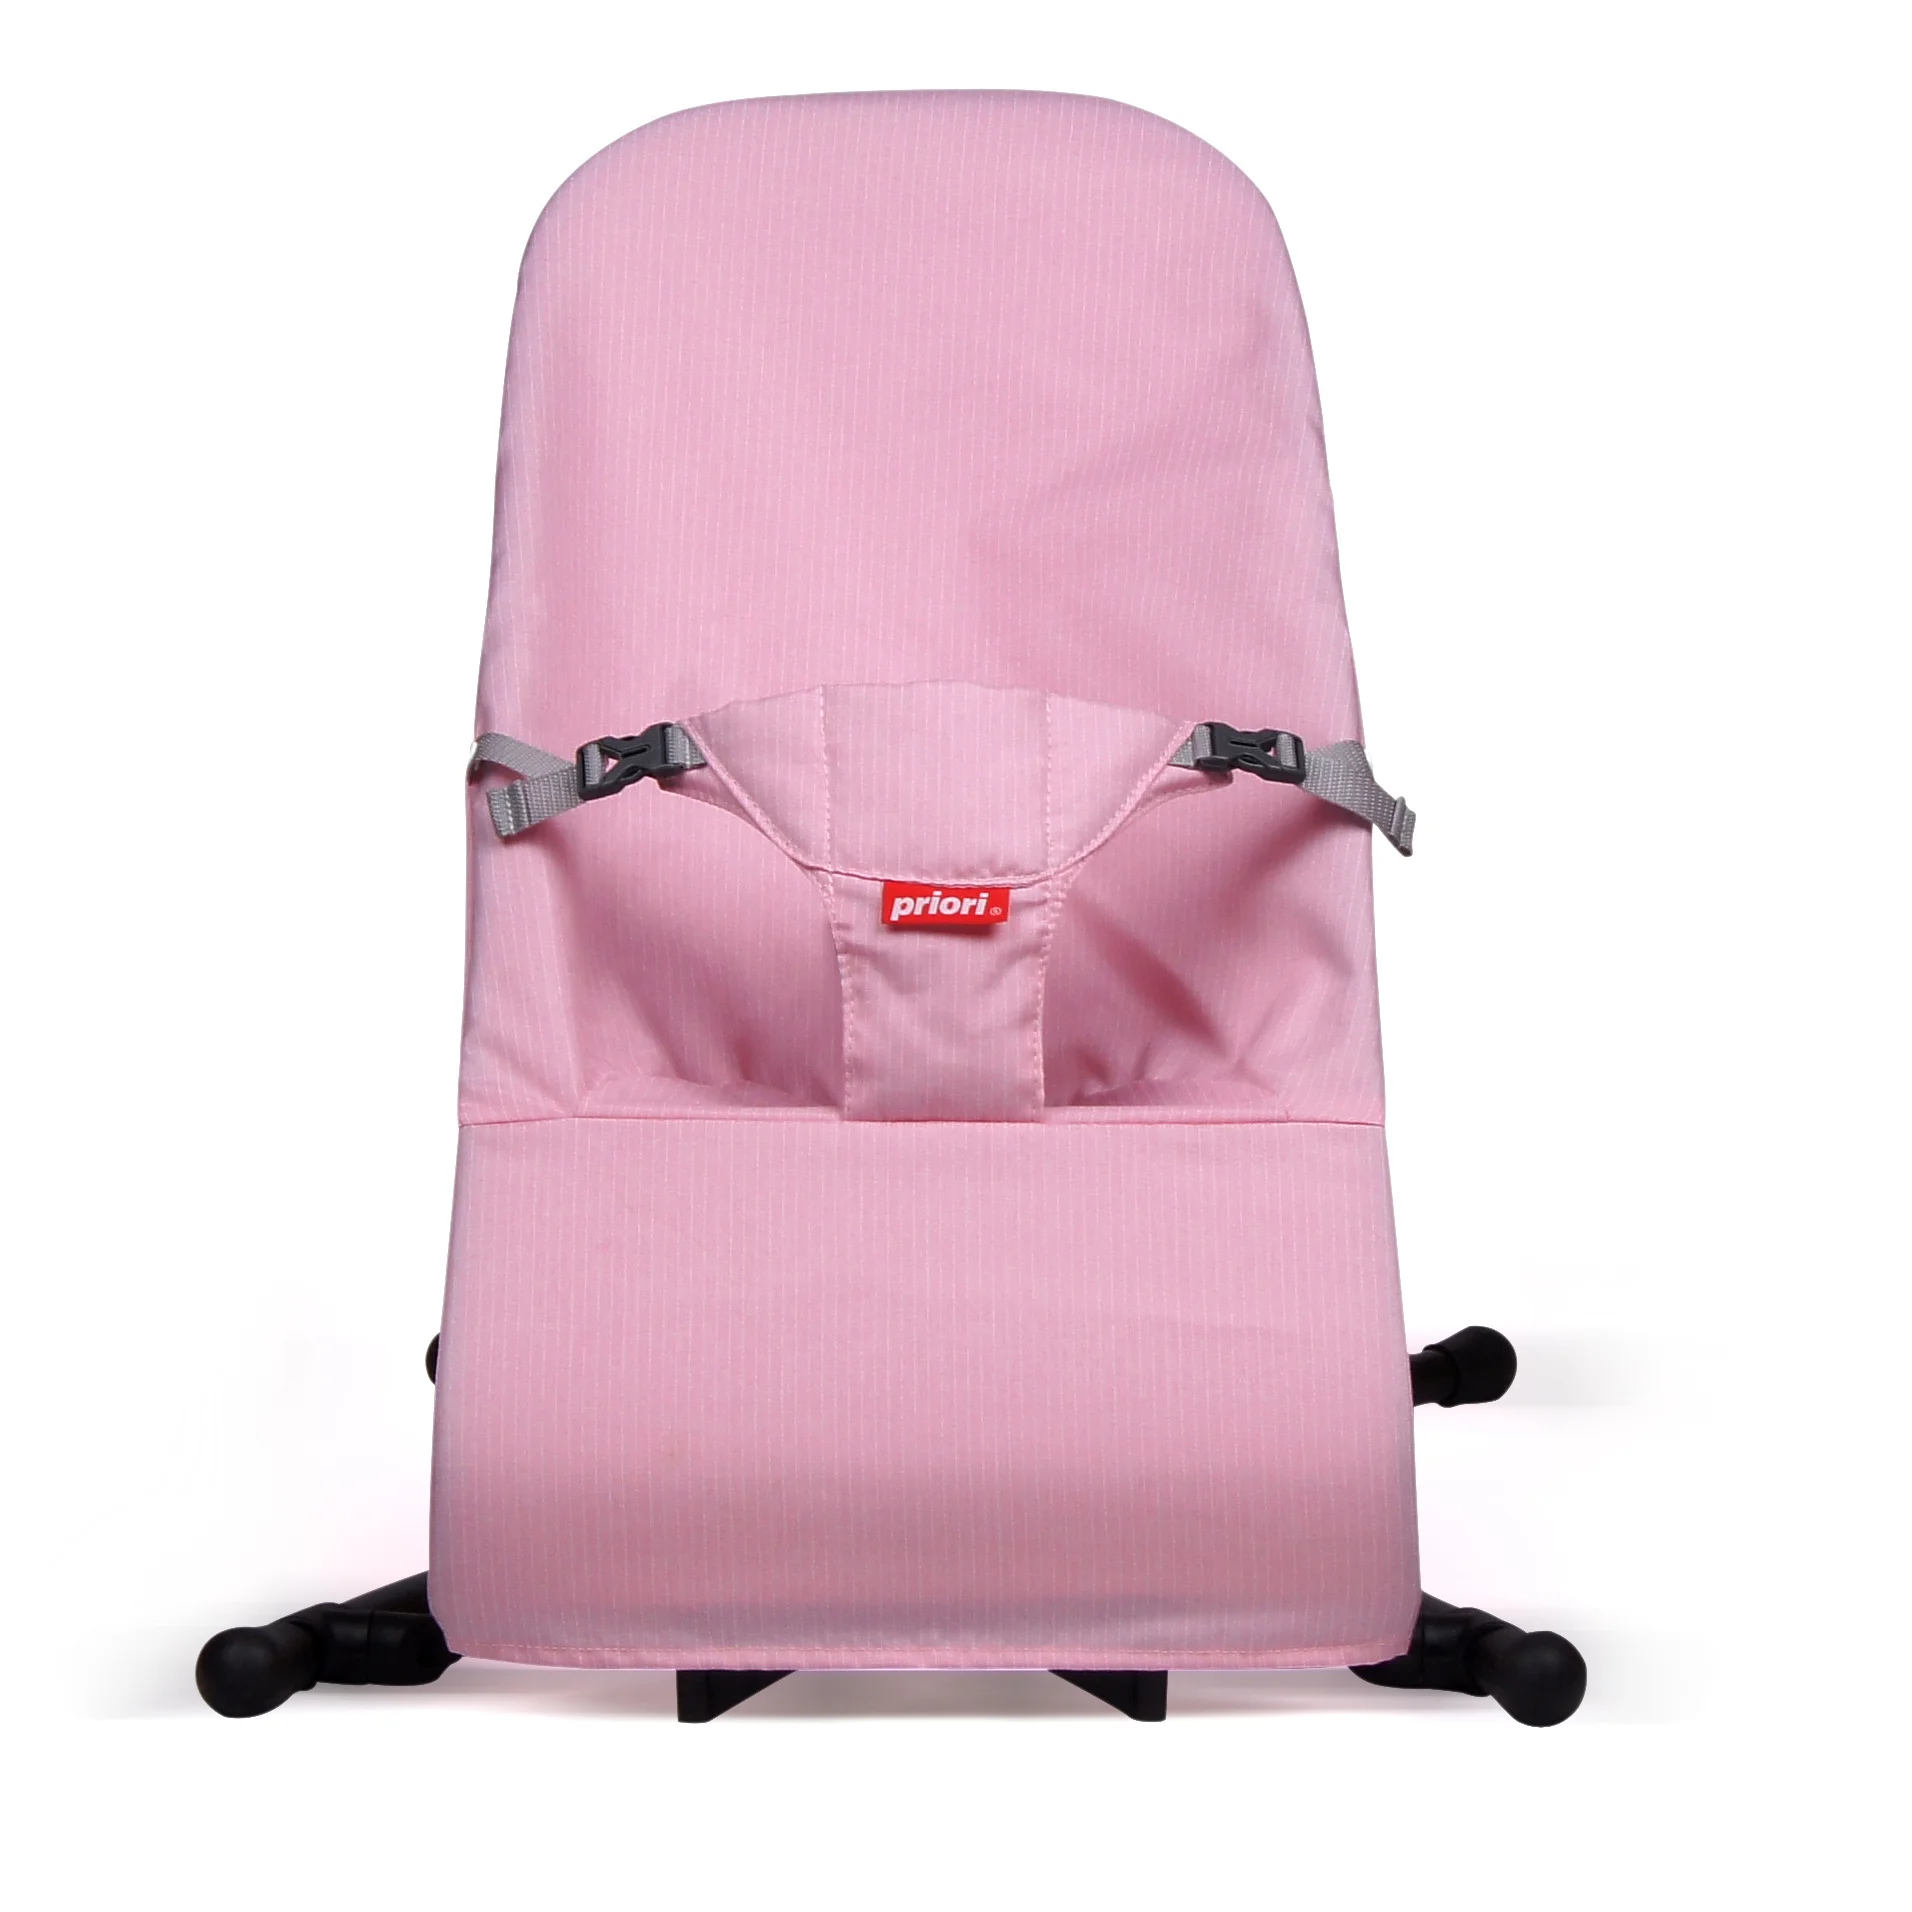 2022 Certified baby rocker baby swing chair kids chair